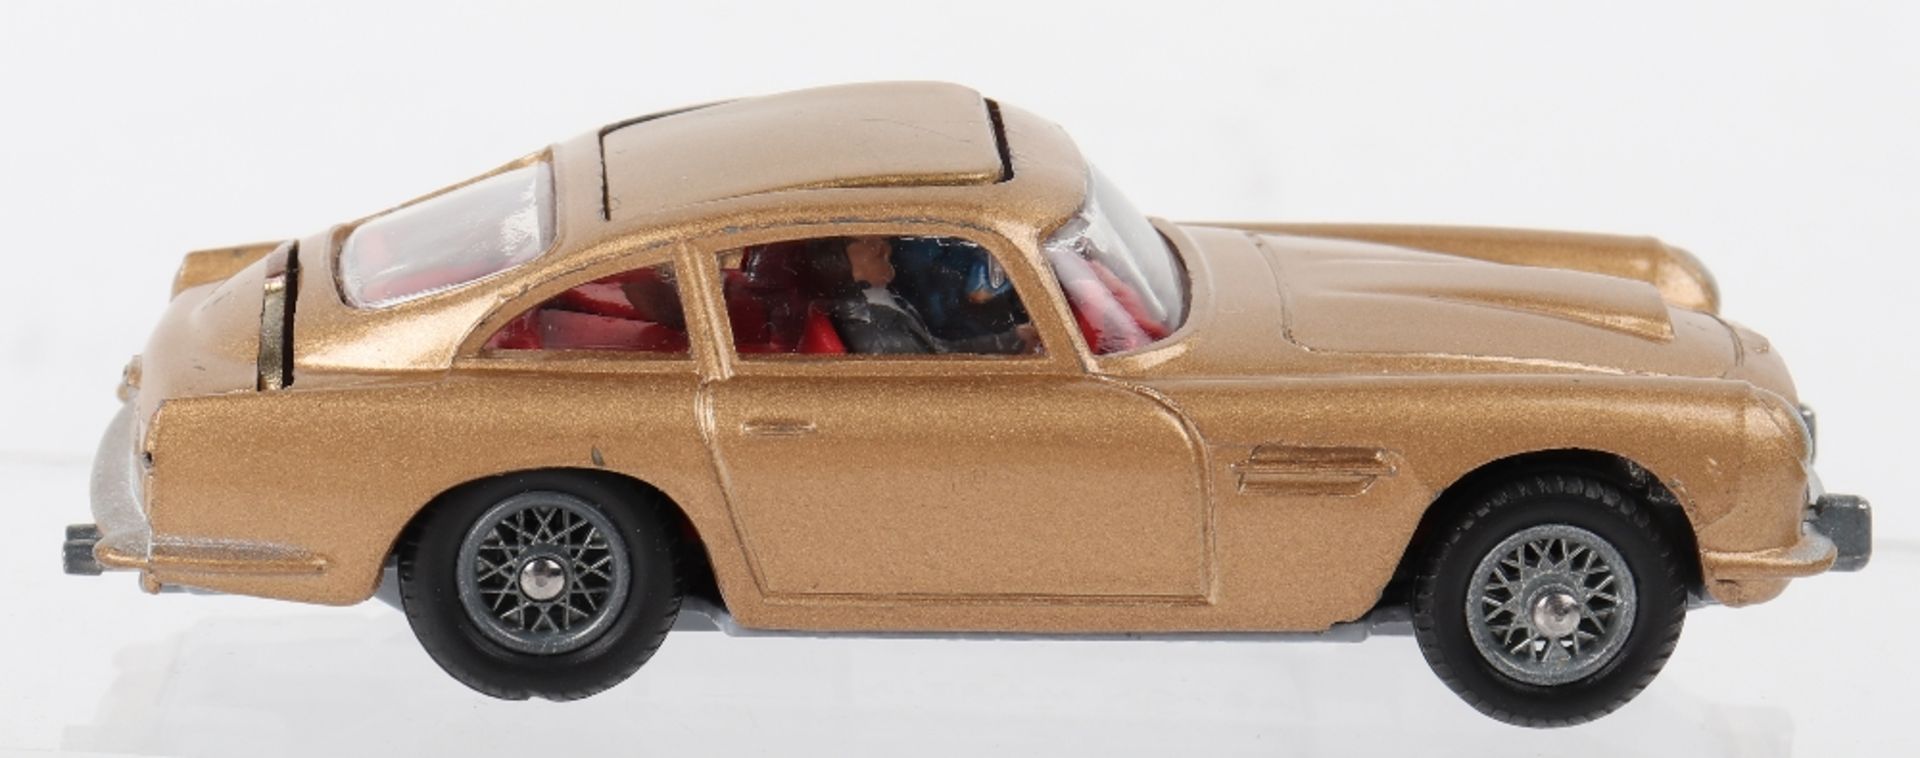 Corgi Toys 261 James Bond Aston Martin D.B.5 from the Film “Goldfinger” - Bild 7 aus 11